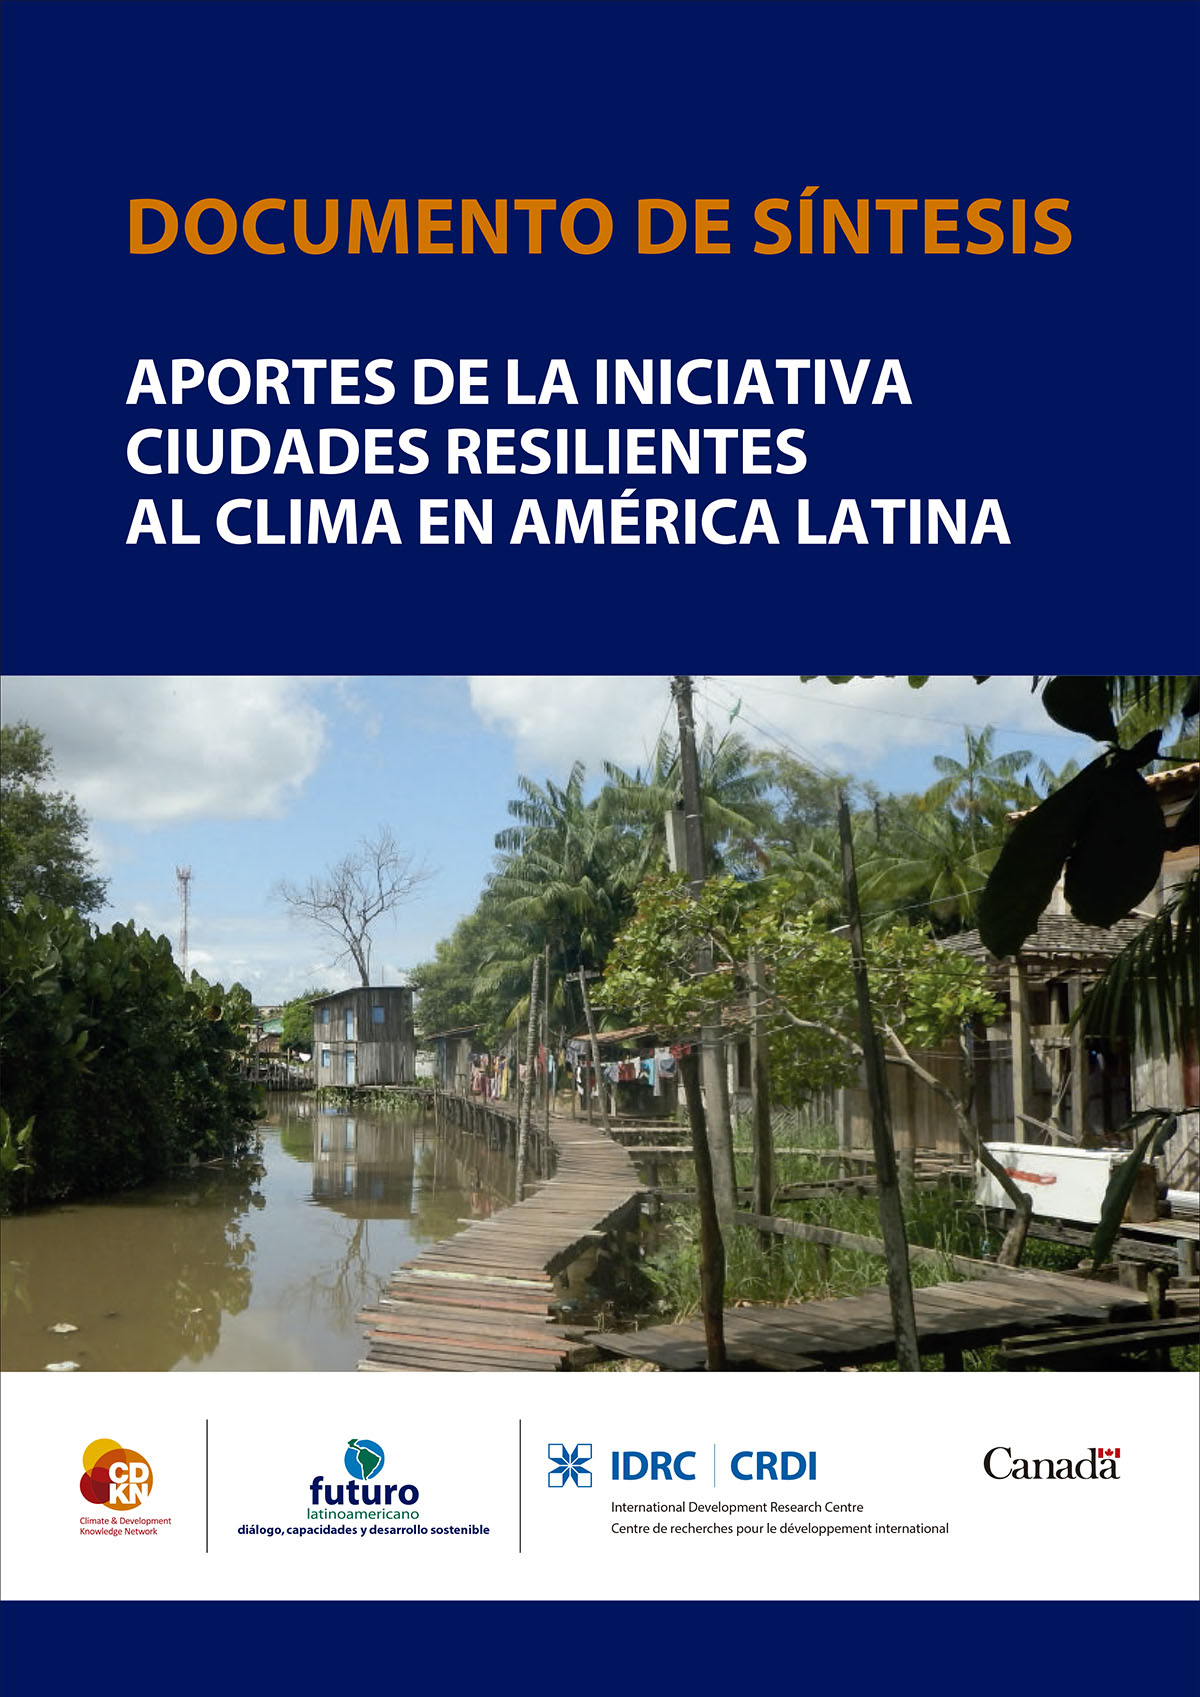 Aportes de la Iniciativa Ciudades Resilientes al Clima en América Latina - documento de síntesis